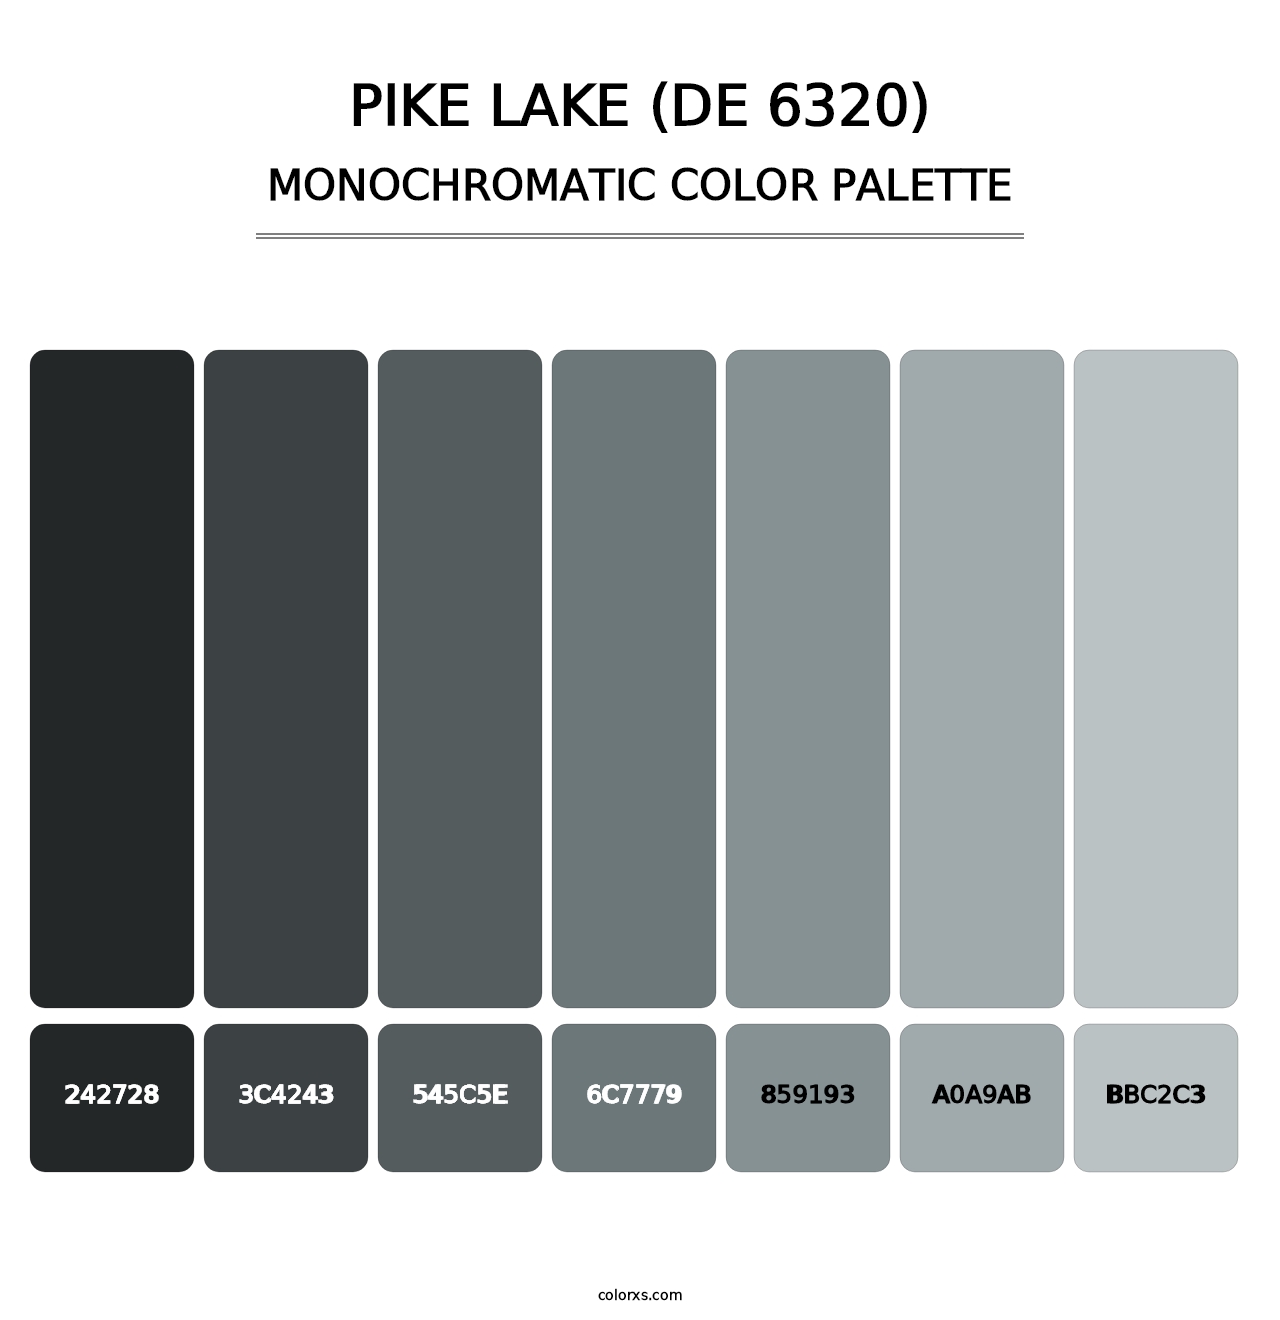 Pike Lake (DE 6320) - Monochromatic Color Palette